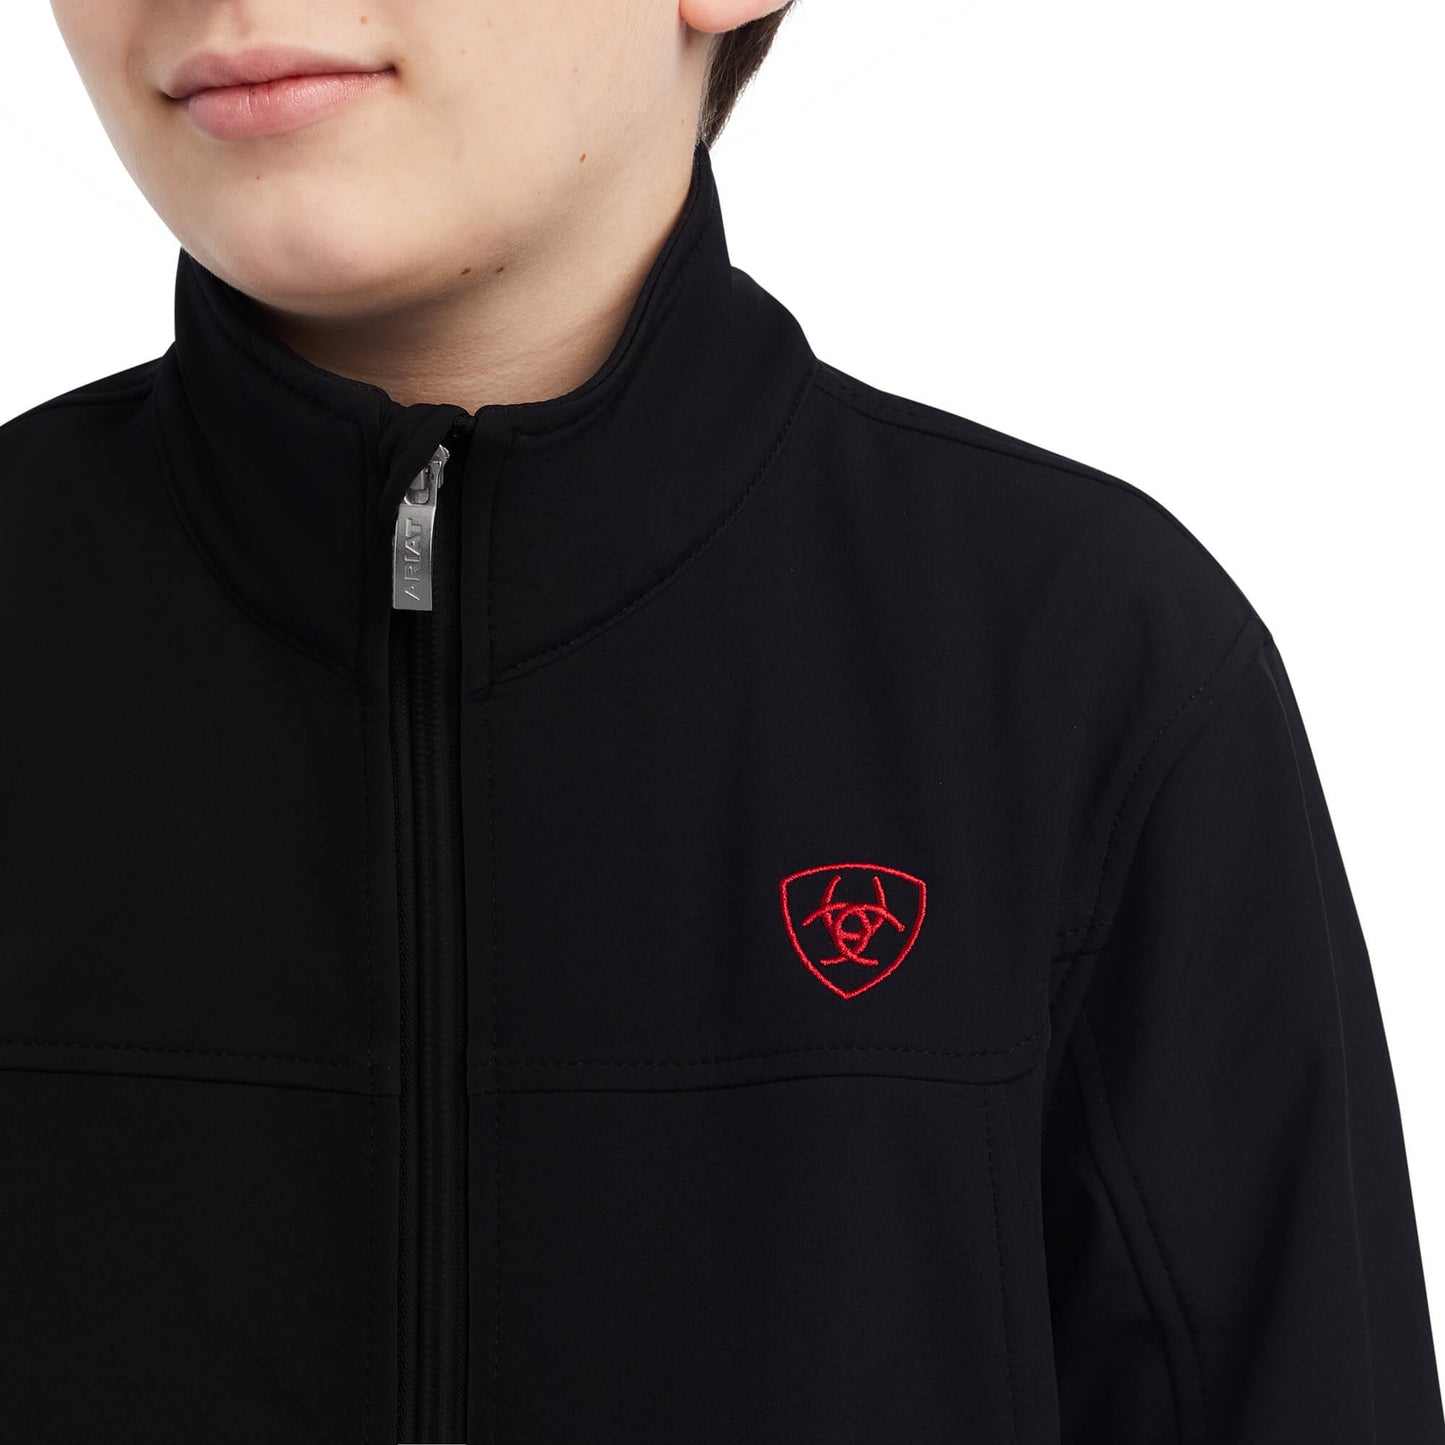 New Team Softshell Brand Jacket